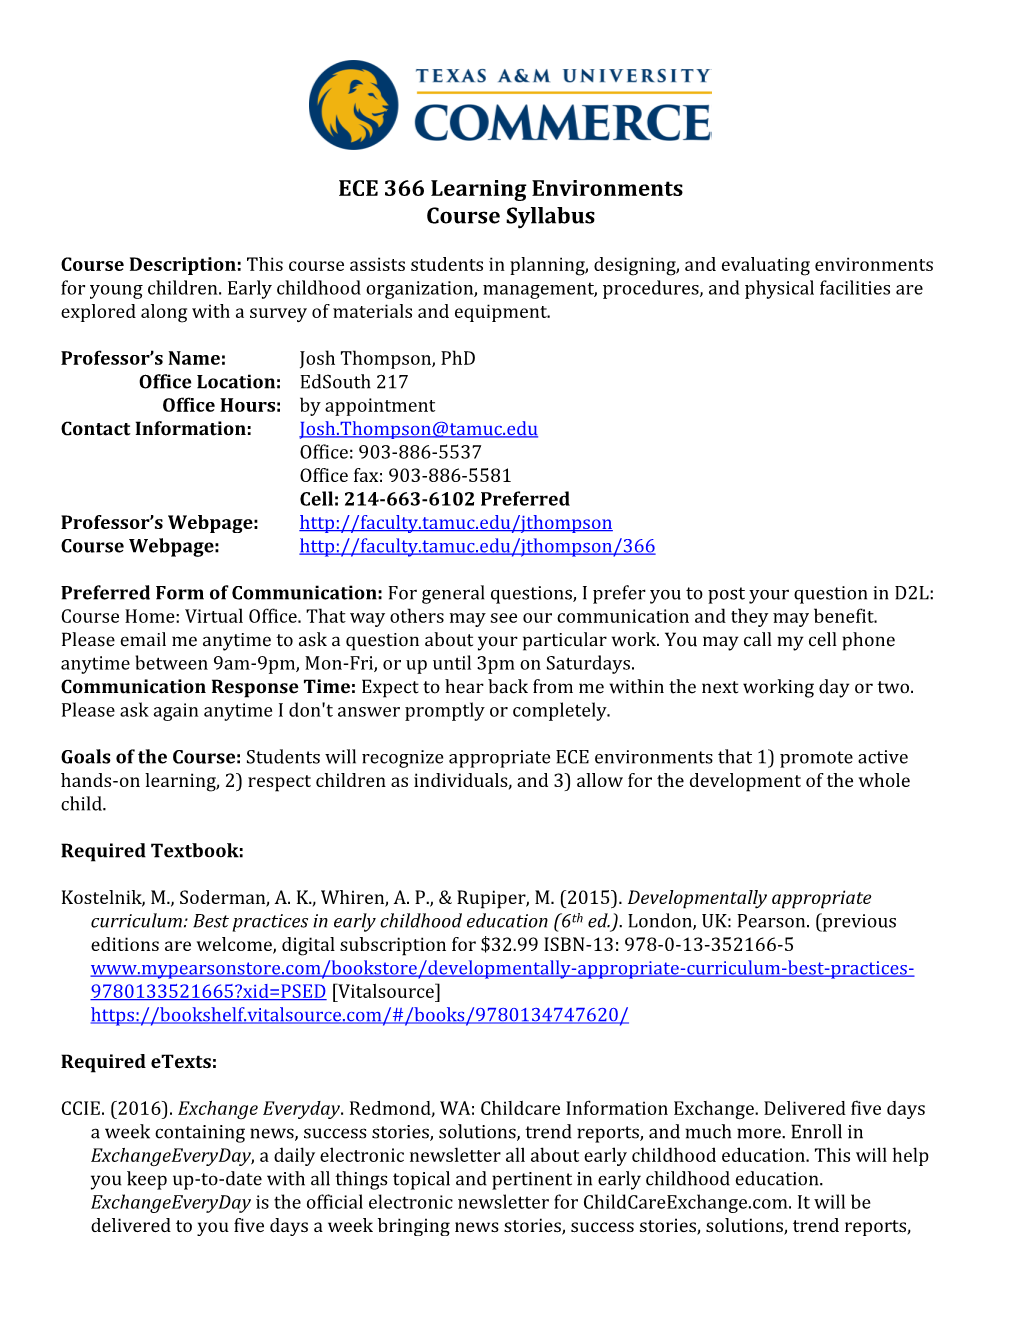 ECE 366 Learning Environments Course Syllabus